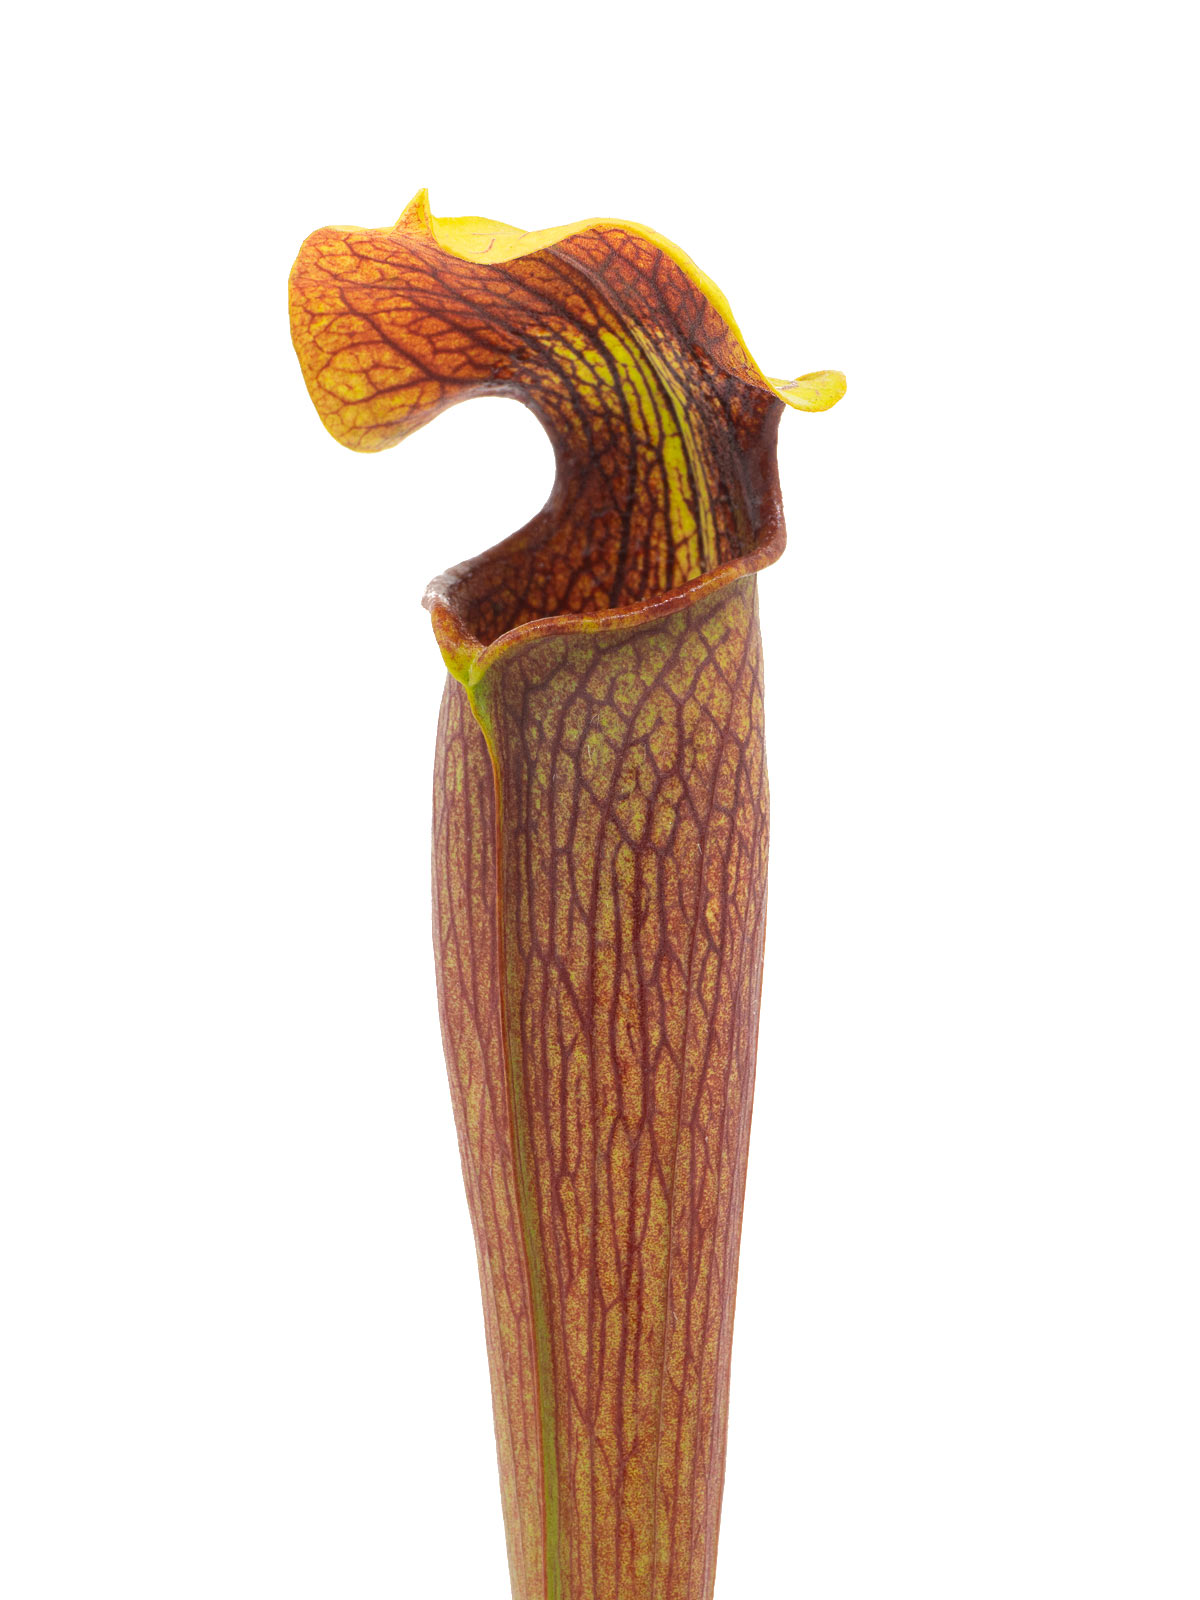 S. alata var. rubrioperculata - MK A46, tall pitchers, Stone County, Mississippi